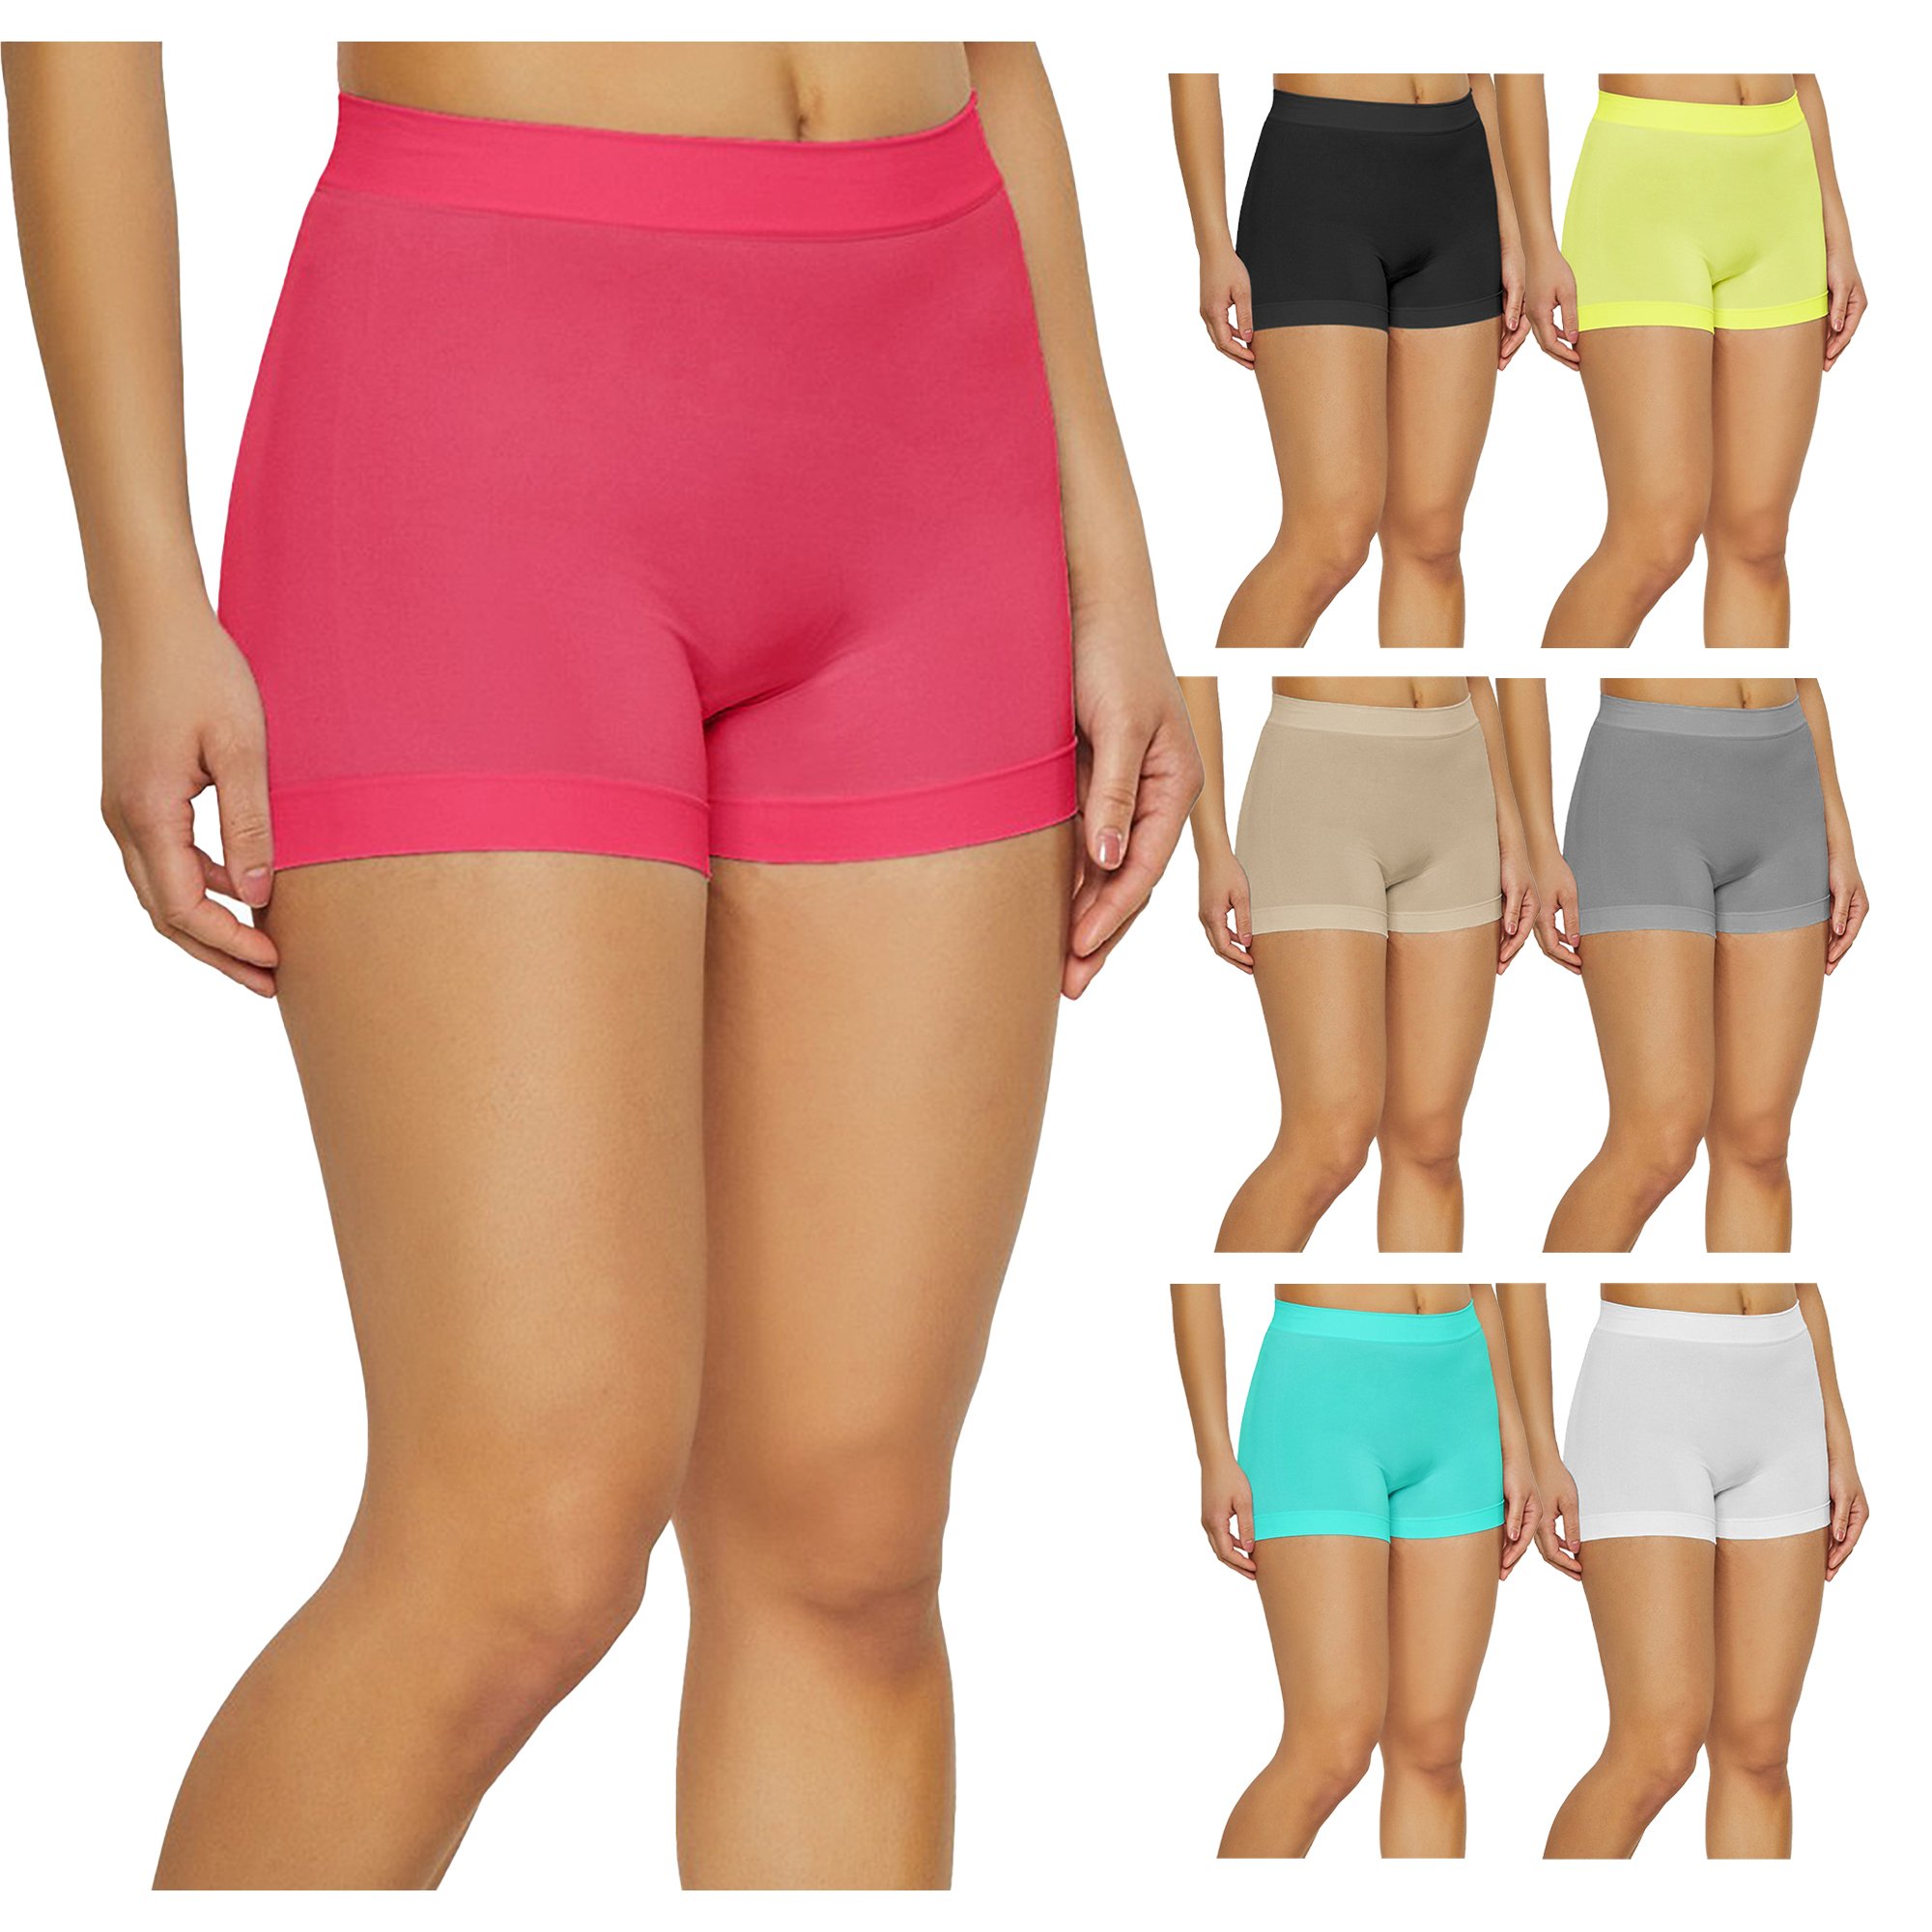 12-Pack Women's High Waisted Biker Bottom Shorts For Yoga Gym Running Ladies Pants - BLACK, XL